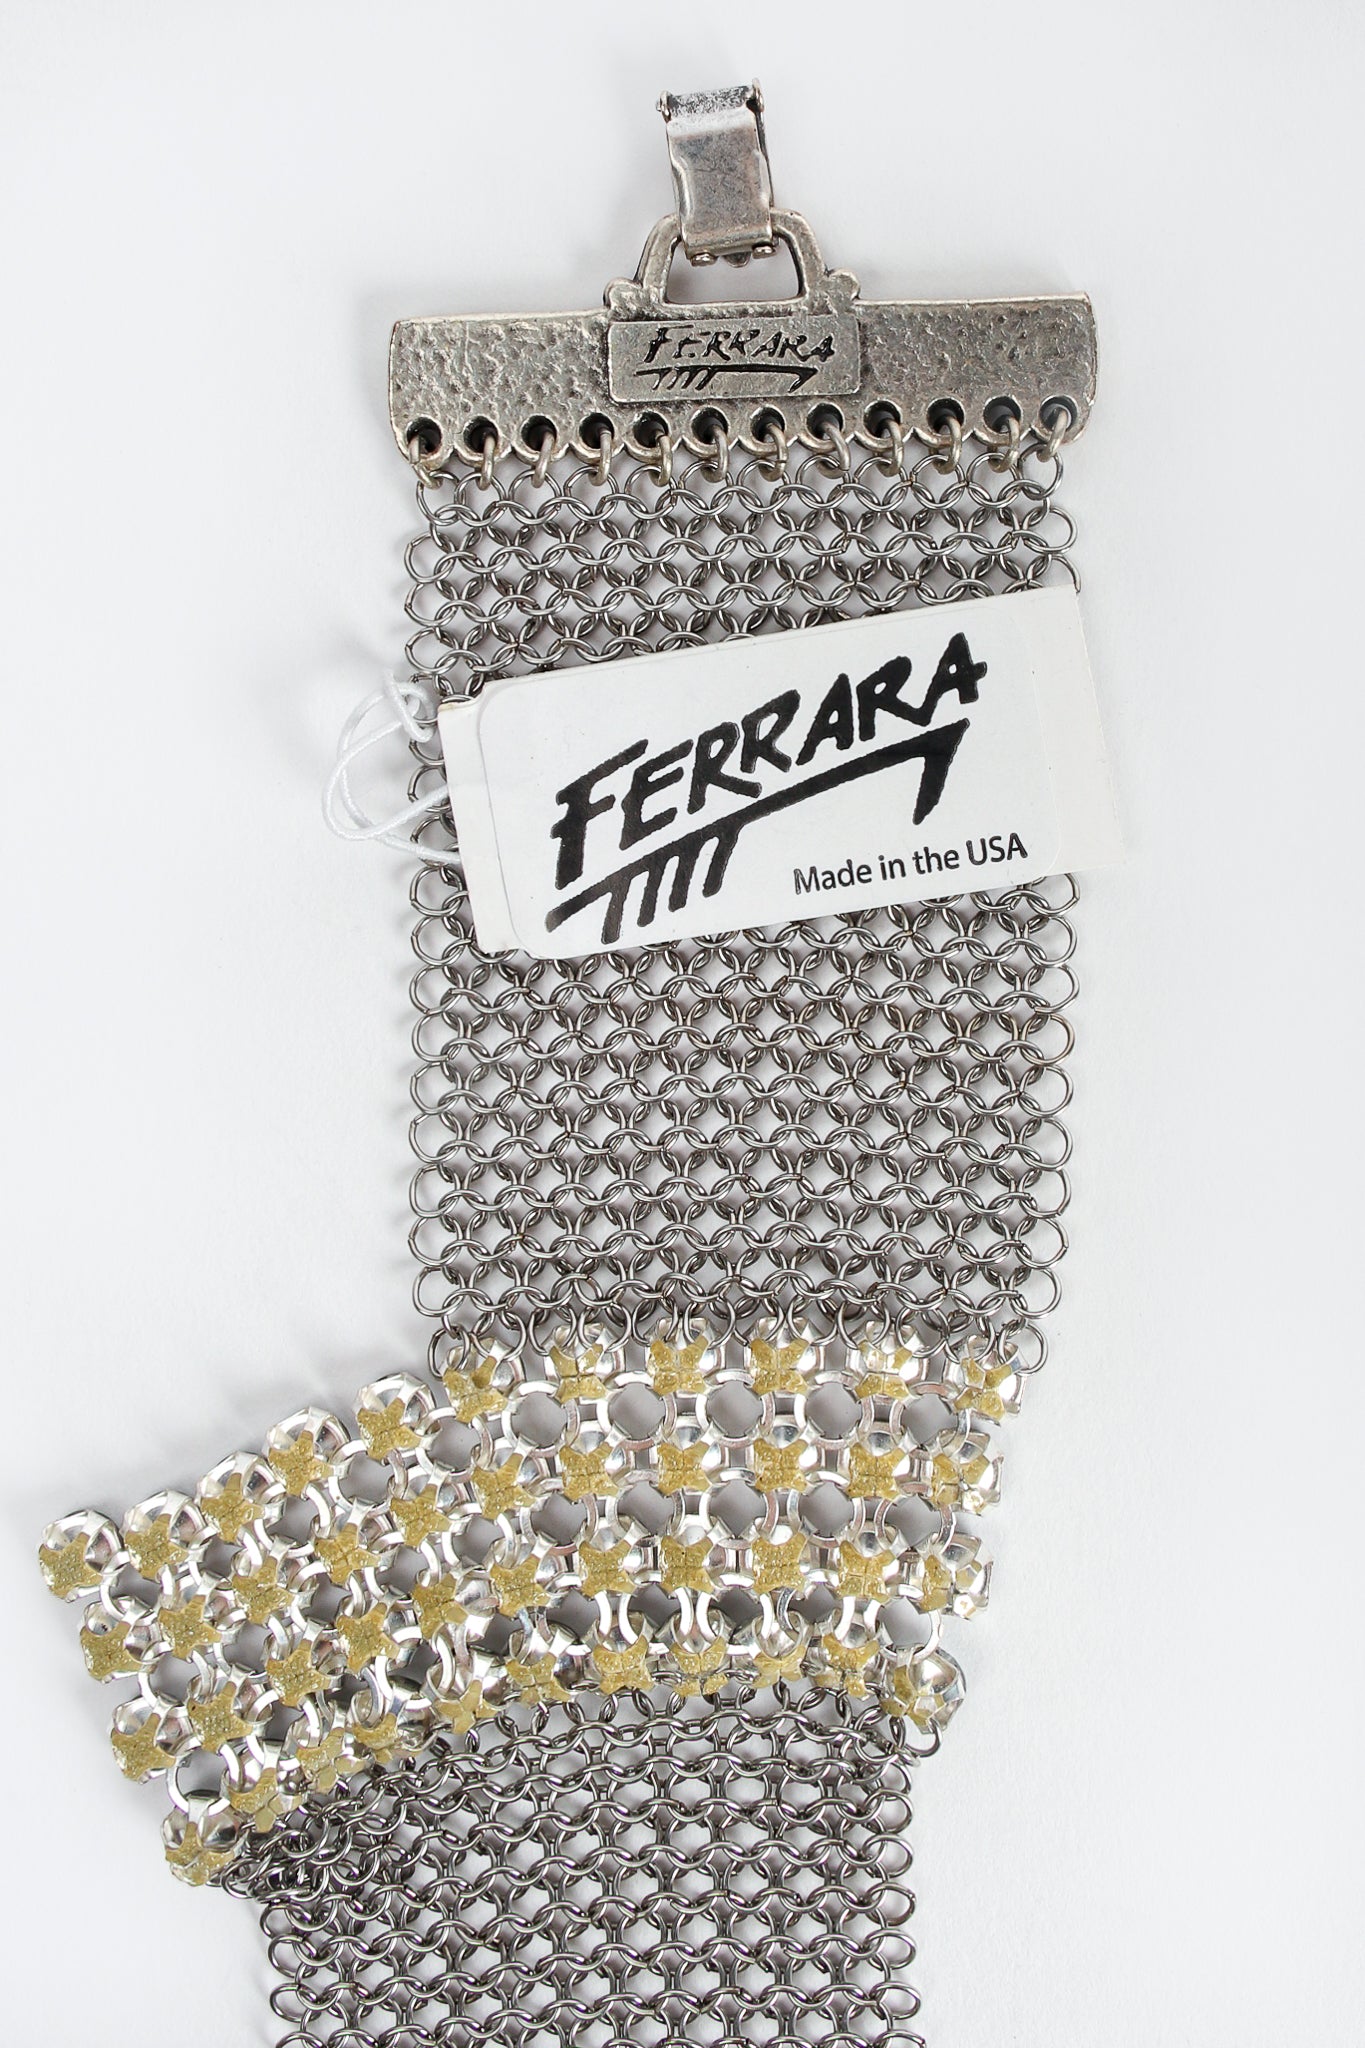 Vintage Anthony Ferrara Pewter Ring Mesh Swarovski Bracelet hangtag at Recess Los Angeles